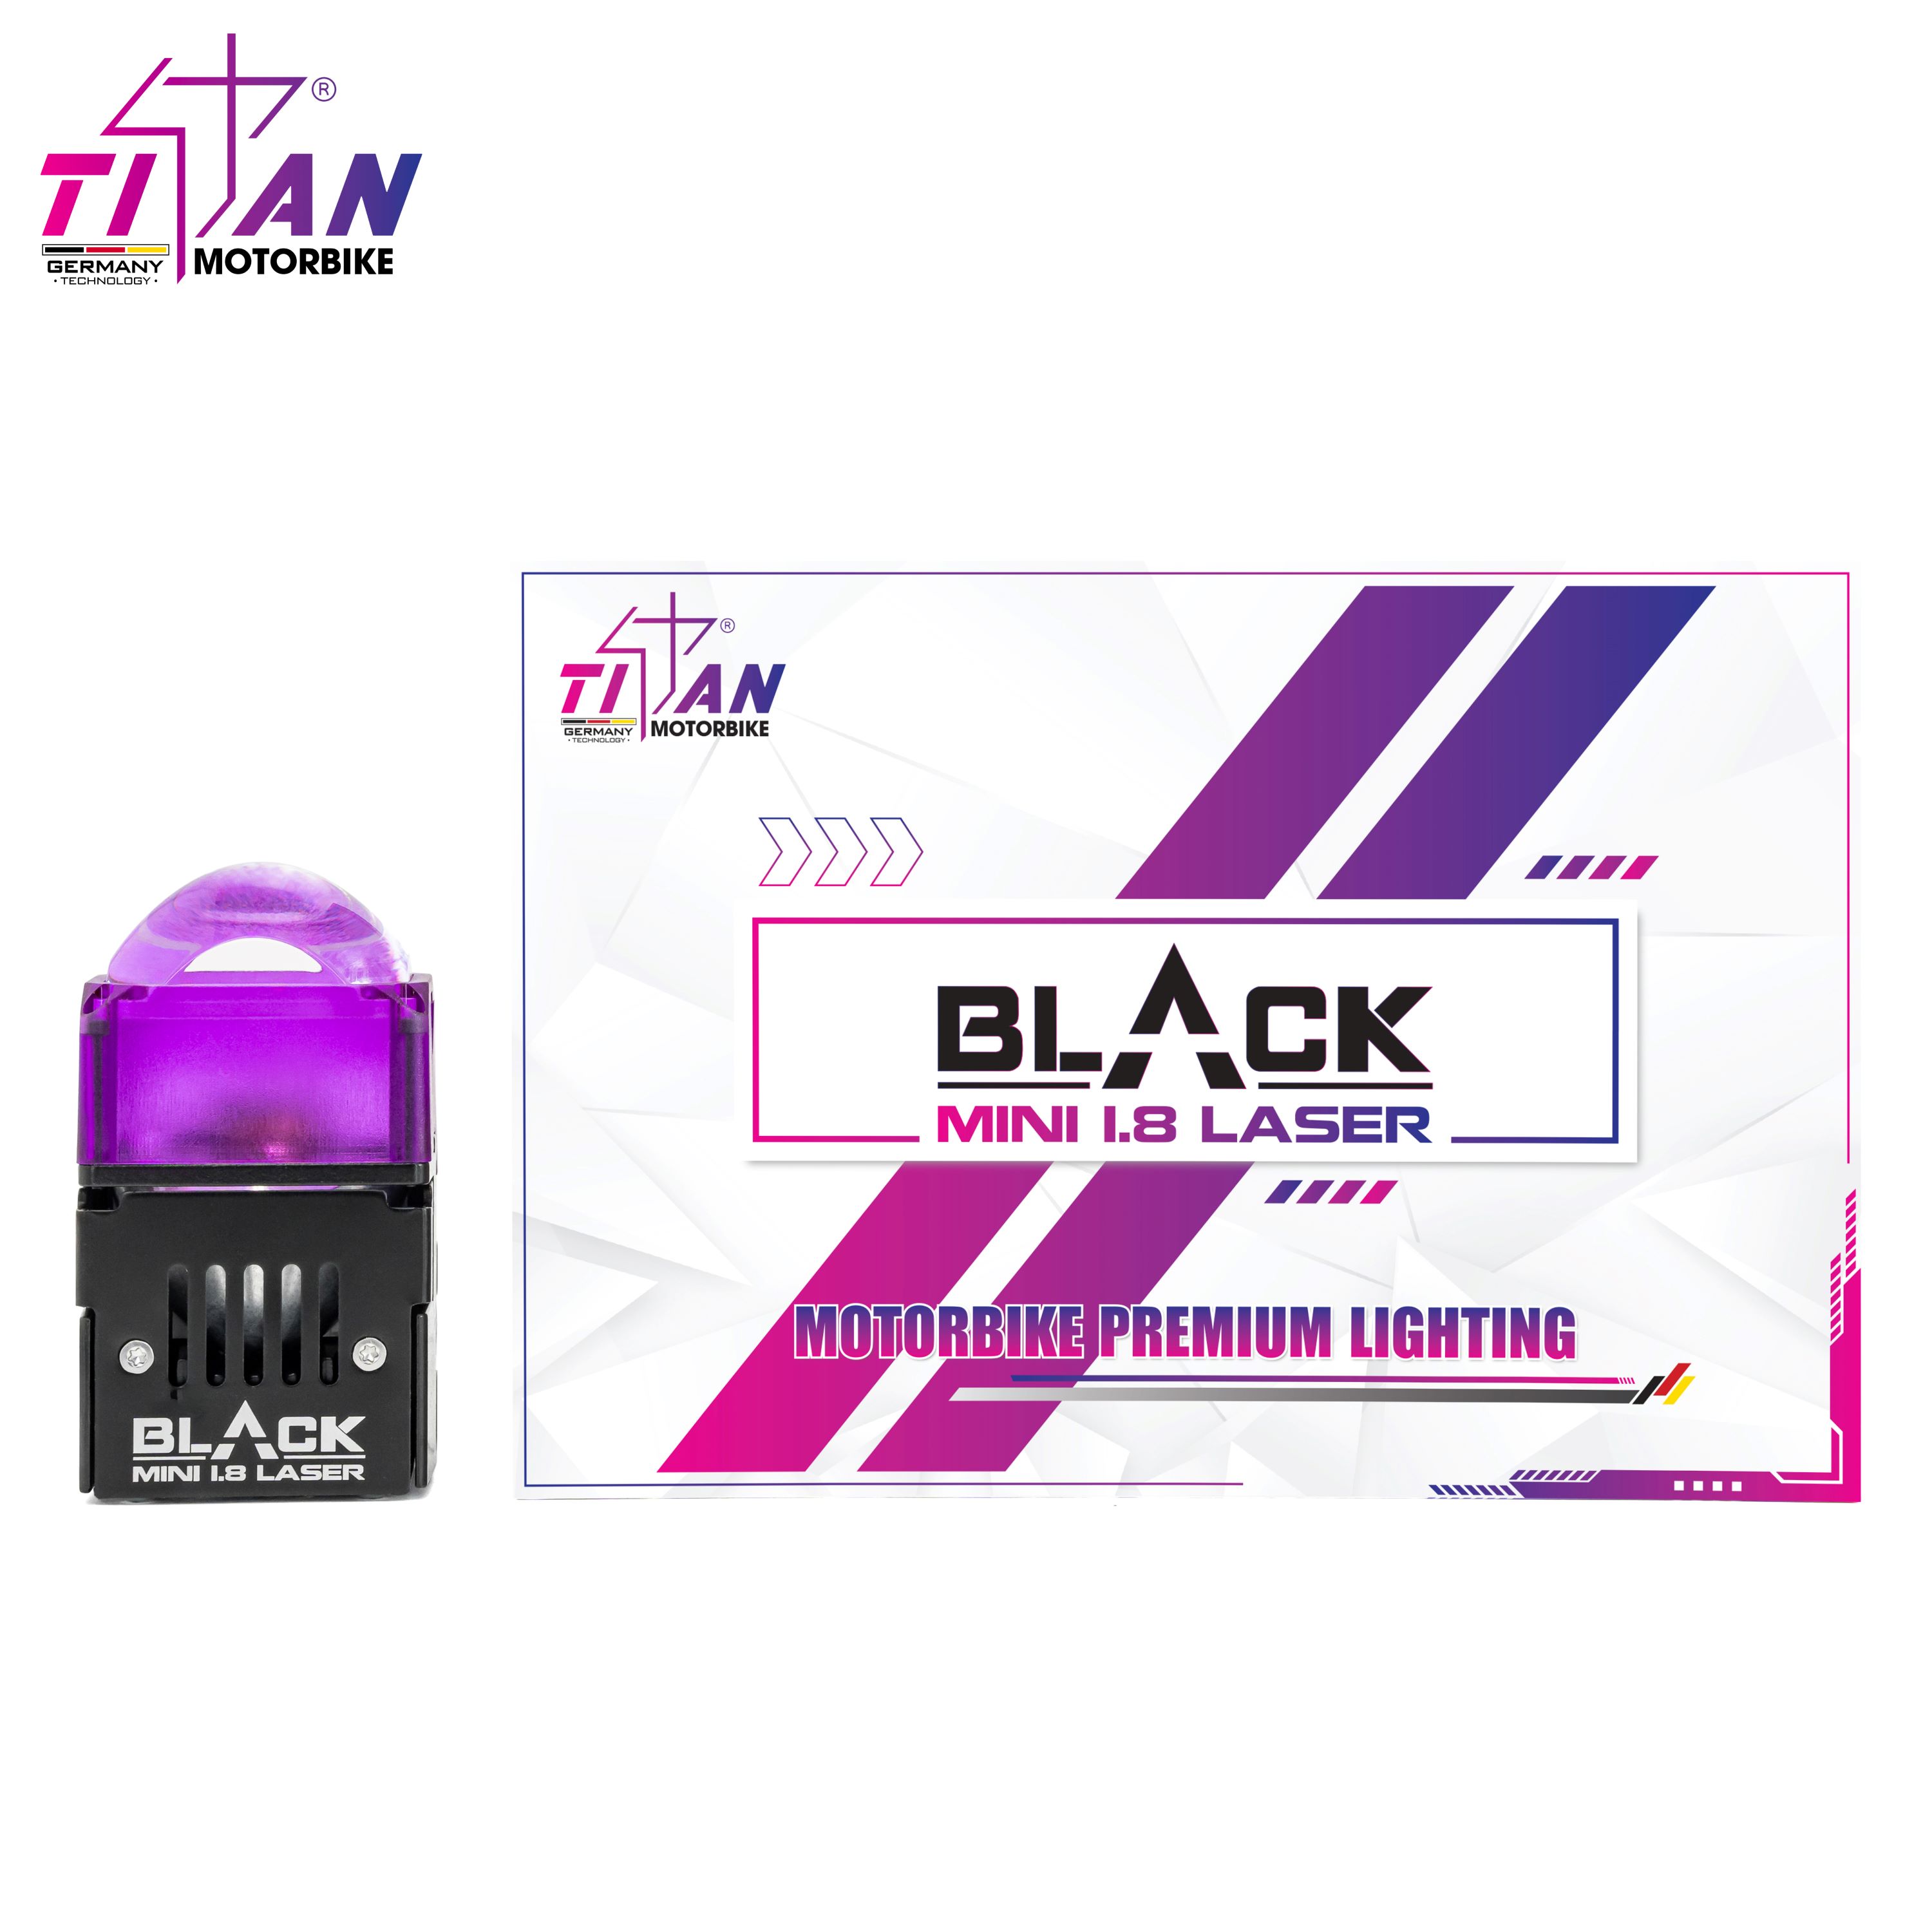 TITAN MOTO BLACK MINI 1.8 LASER 